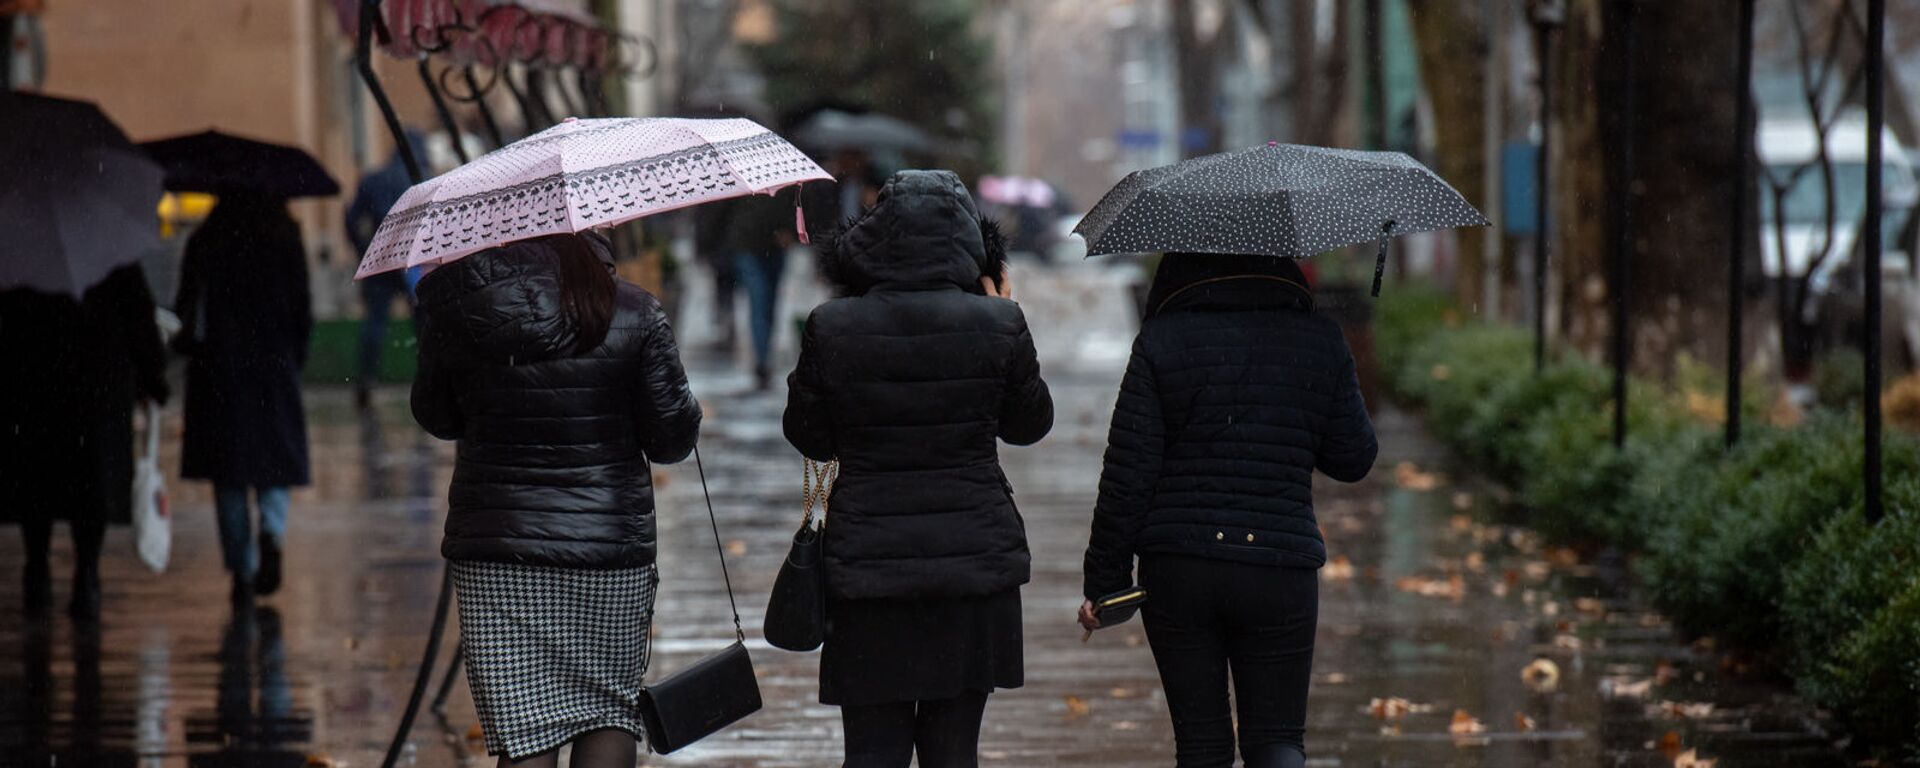 Девушки с зонтами под дождем - Sputnik Արմենիա, 1920, 16.03.2021